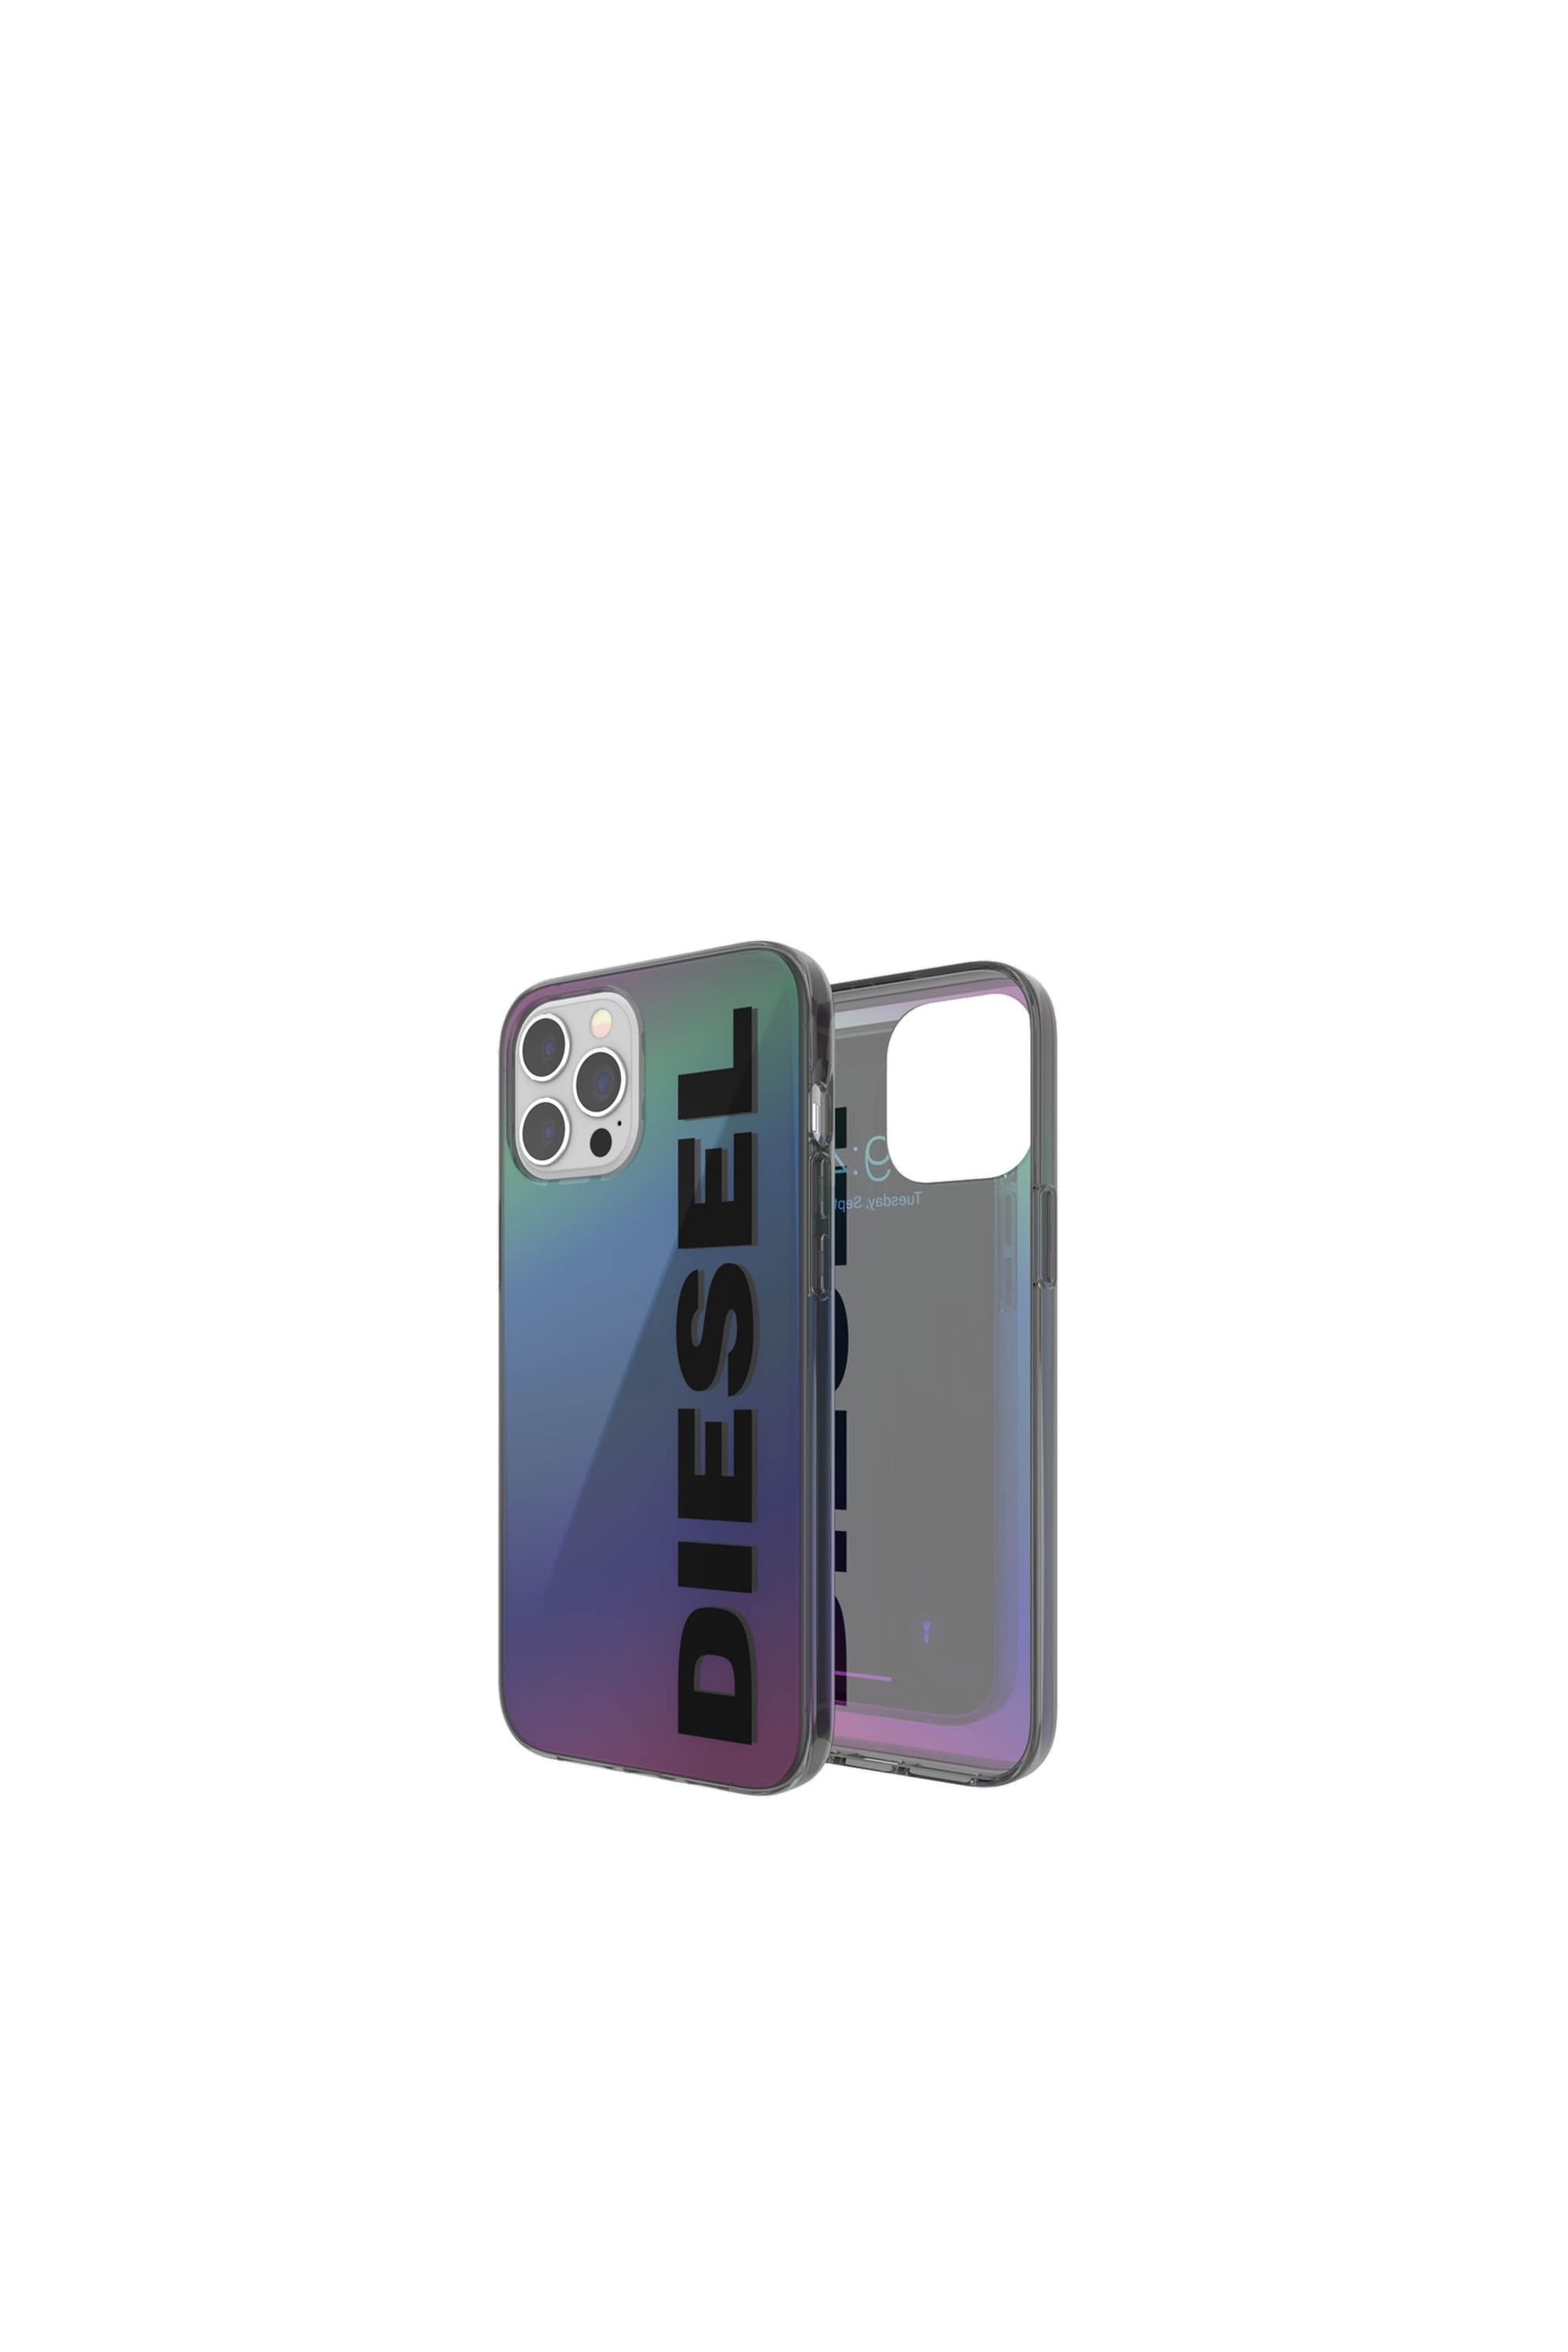 Diesel - Cover olografica in TPU per iPhone 12 Pro Max - Cover - Unisex - Multicolor